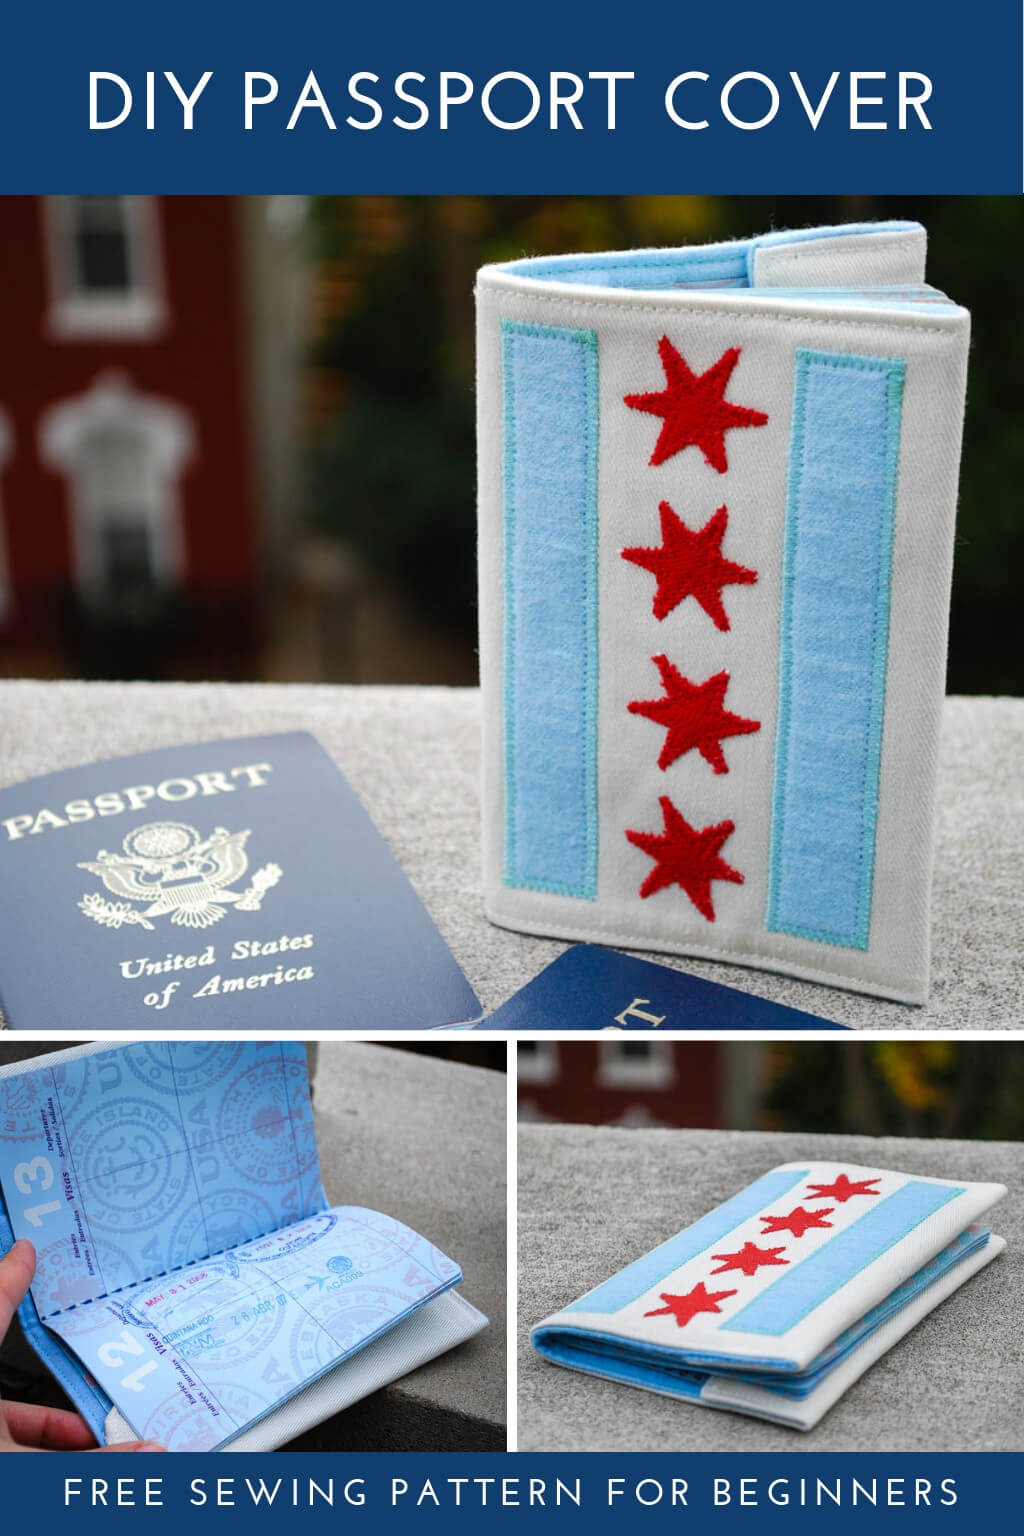 DIY passport cover free sewing patterns